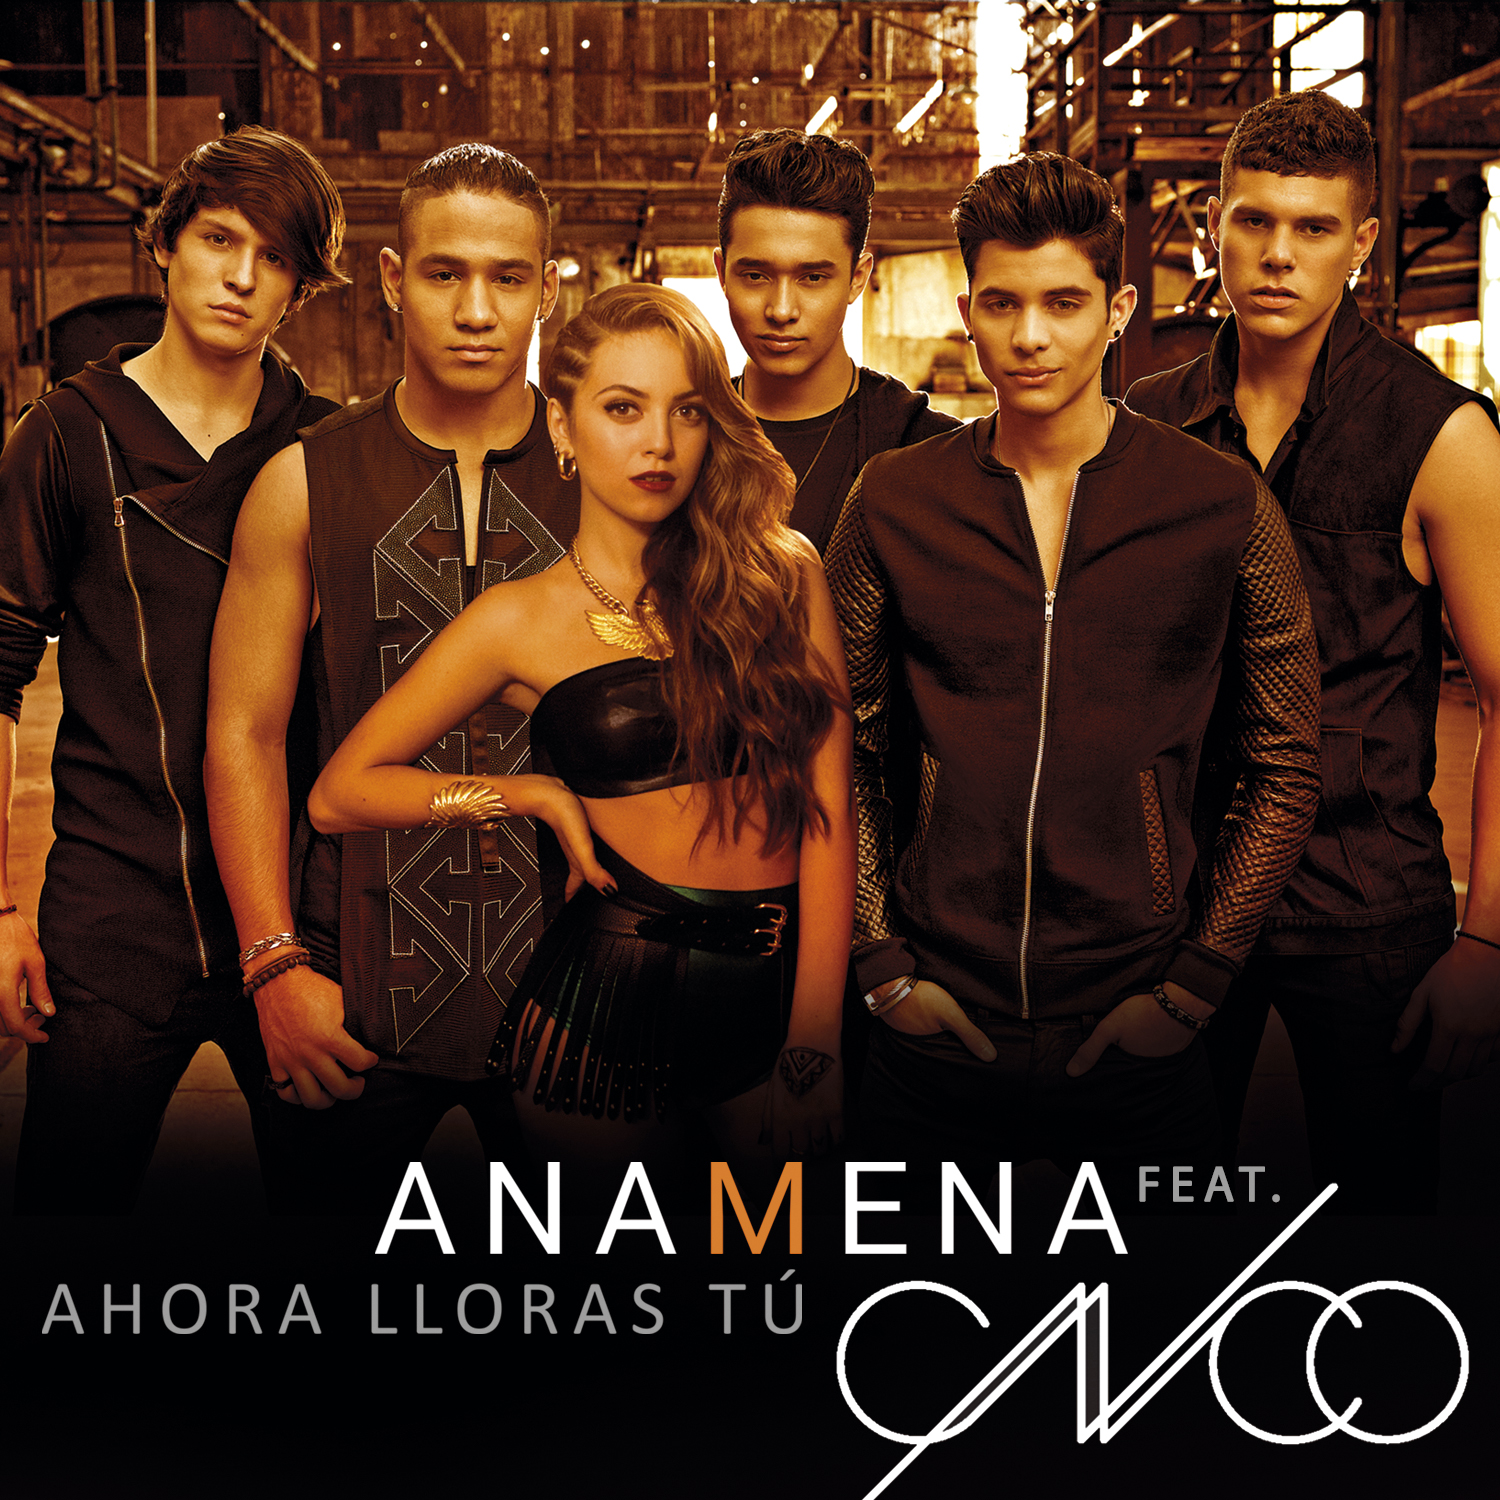 Ana Mena ft. featuring CNCO Ahora Lloras Tú cover artwork